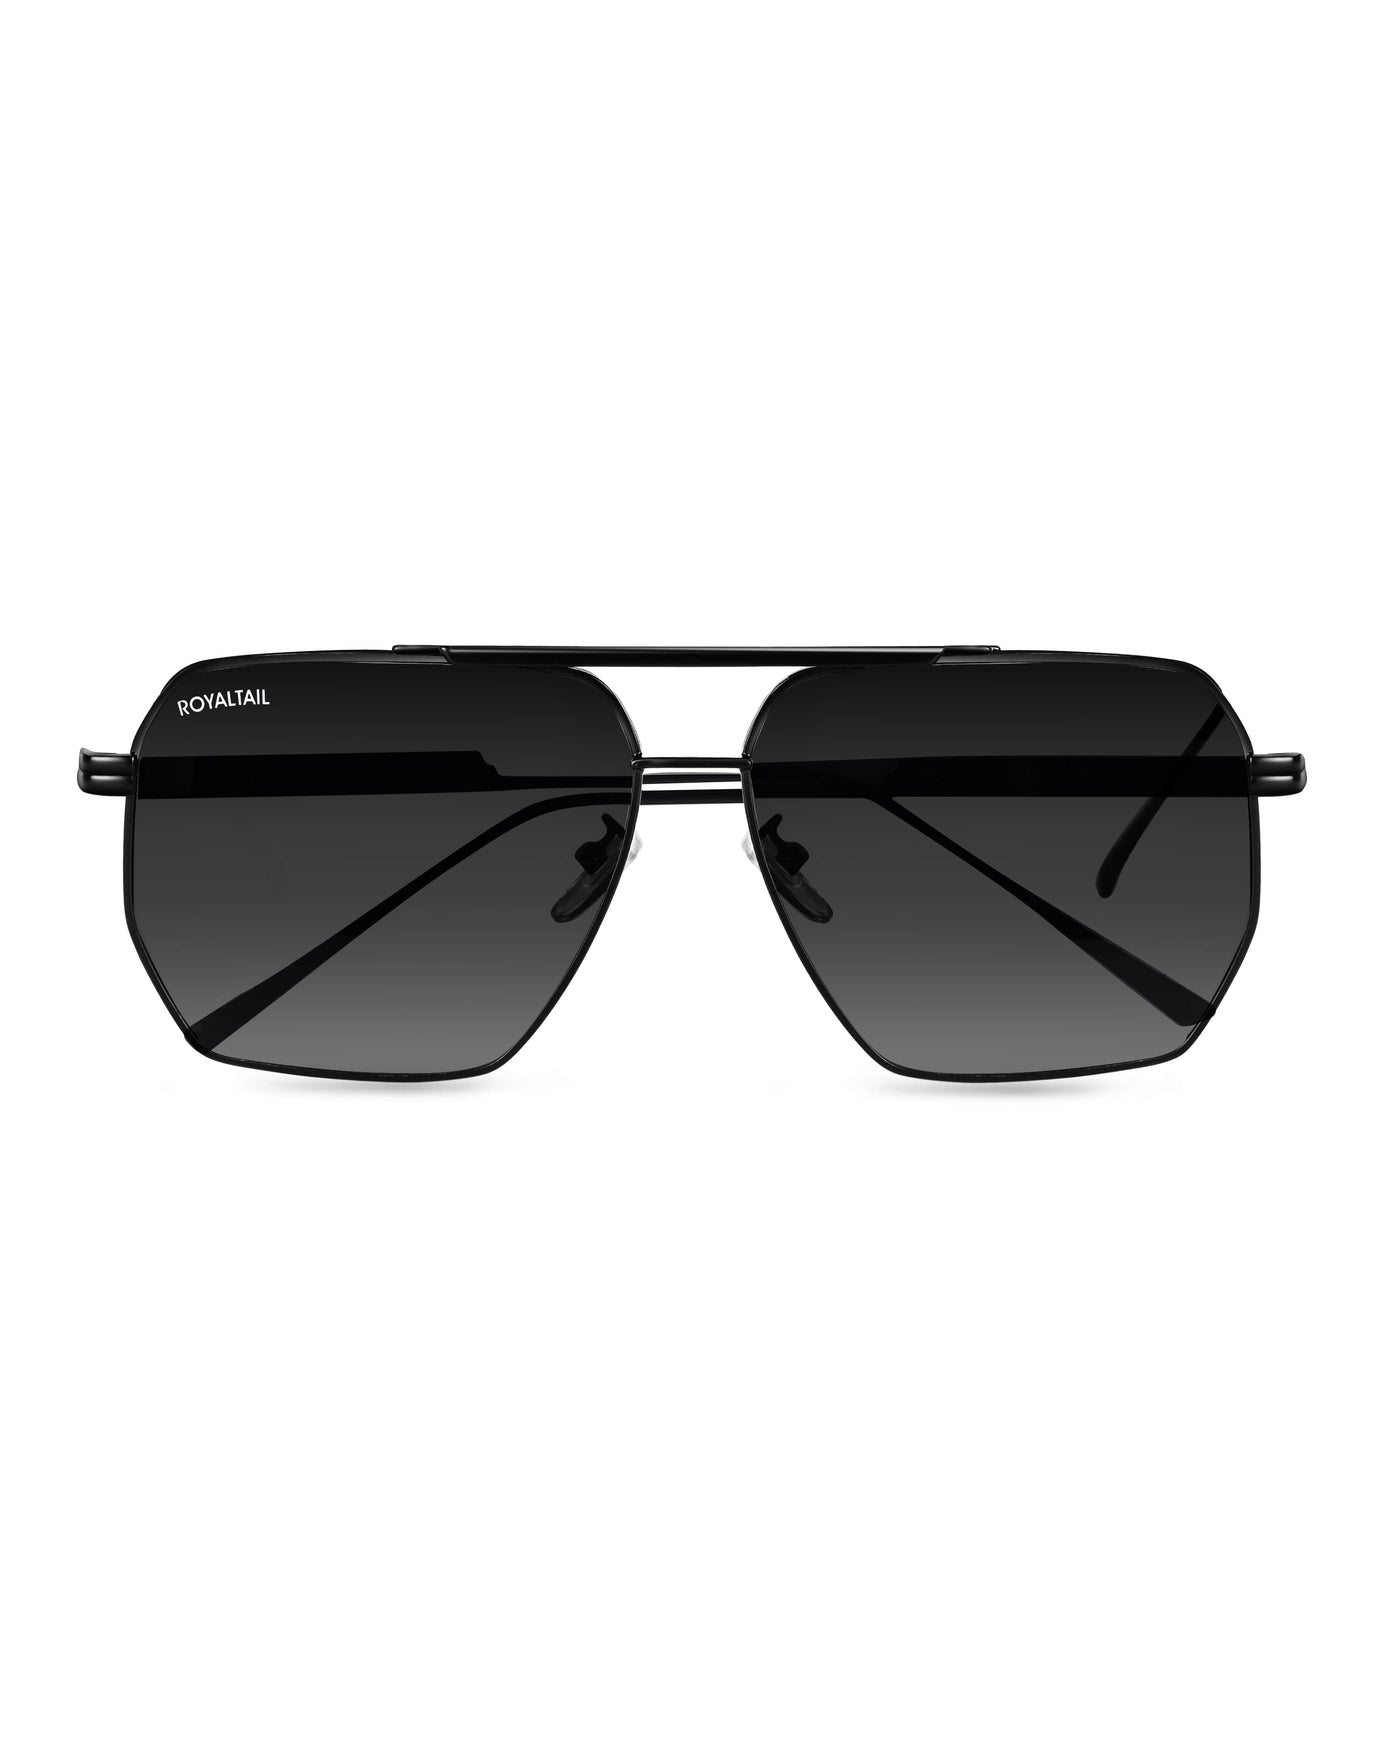 Bottaga Black UV Protected Metal Sunglasses RT061